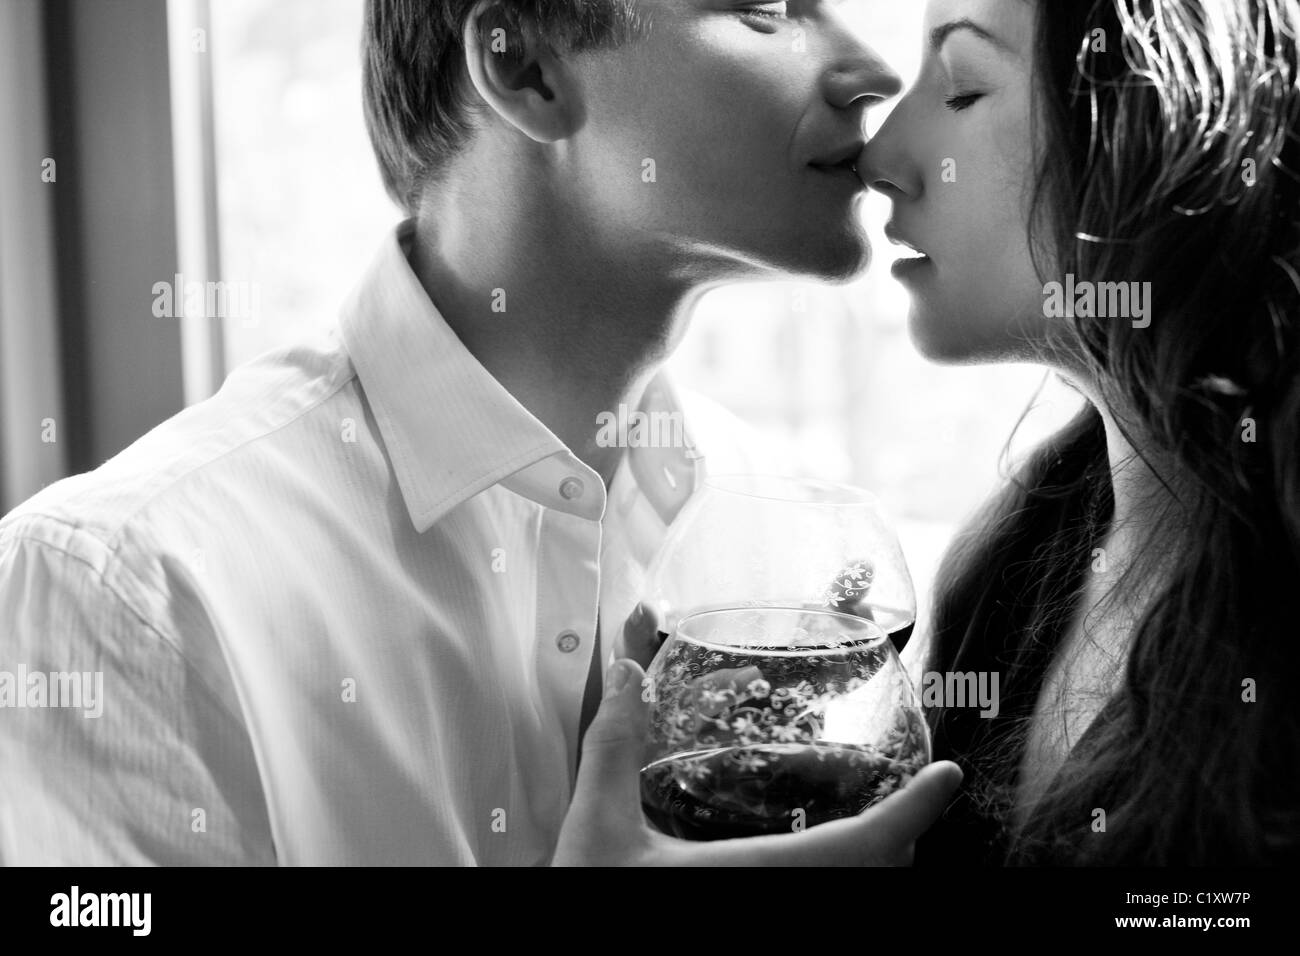 Man kissing woman Stock Photo